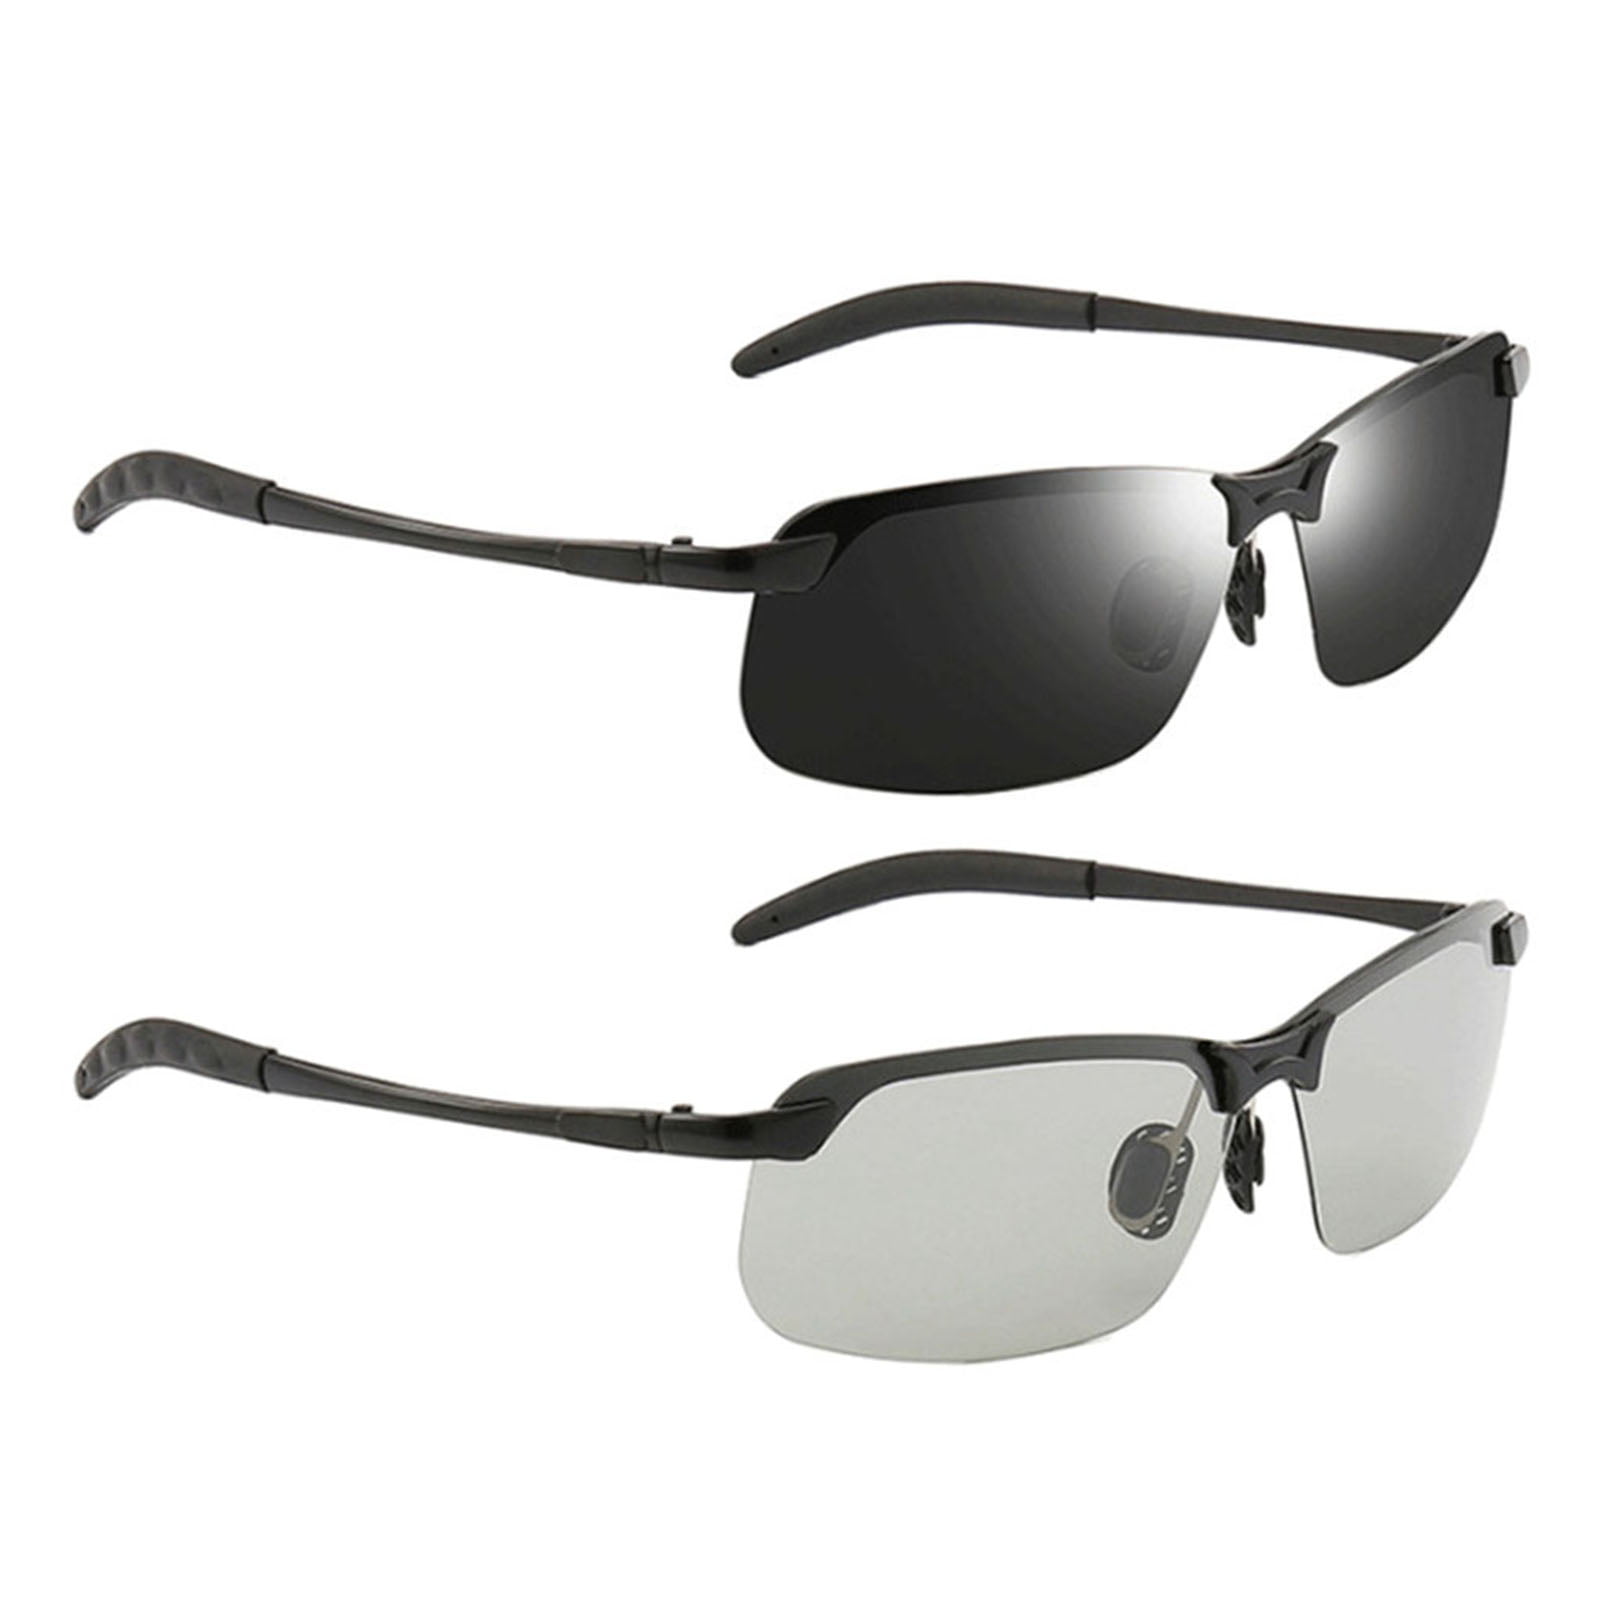 Men Sport Polarized Sunglasses Outdoor Fishing Riding Travel Glasses Hot 2019 